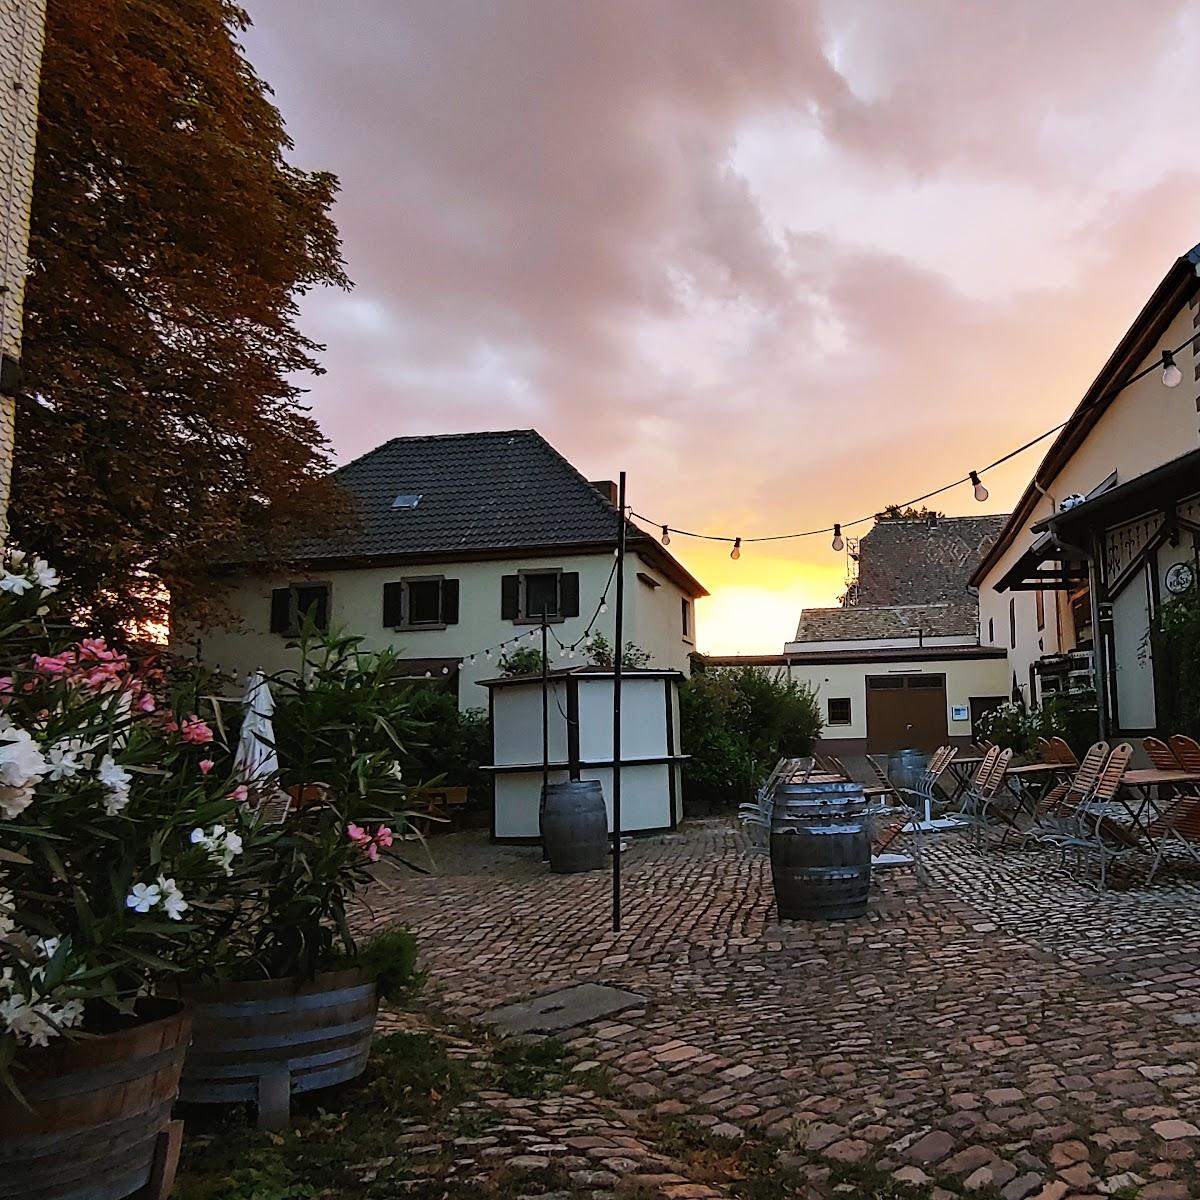 Restaurant "Der Schwarze Herrgott" in Zellertal